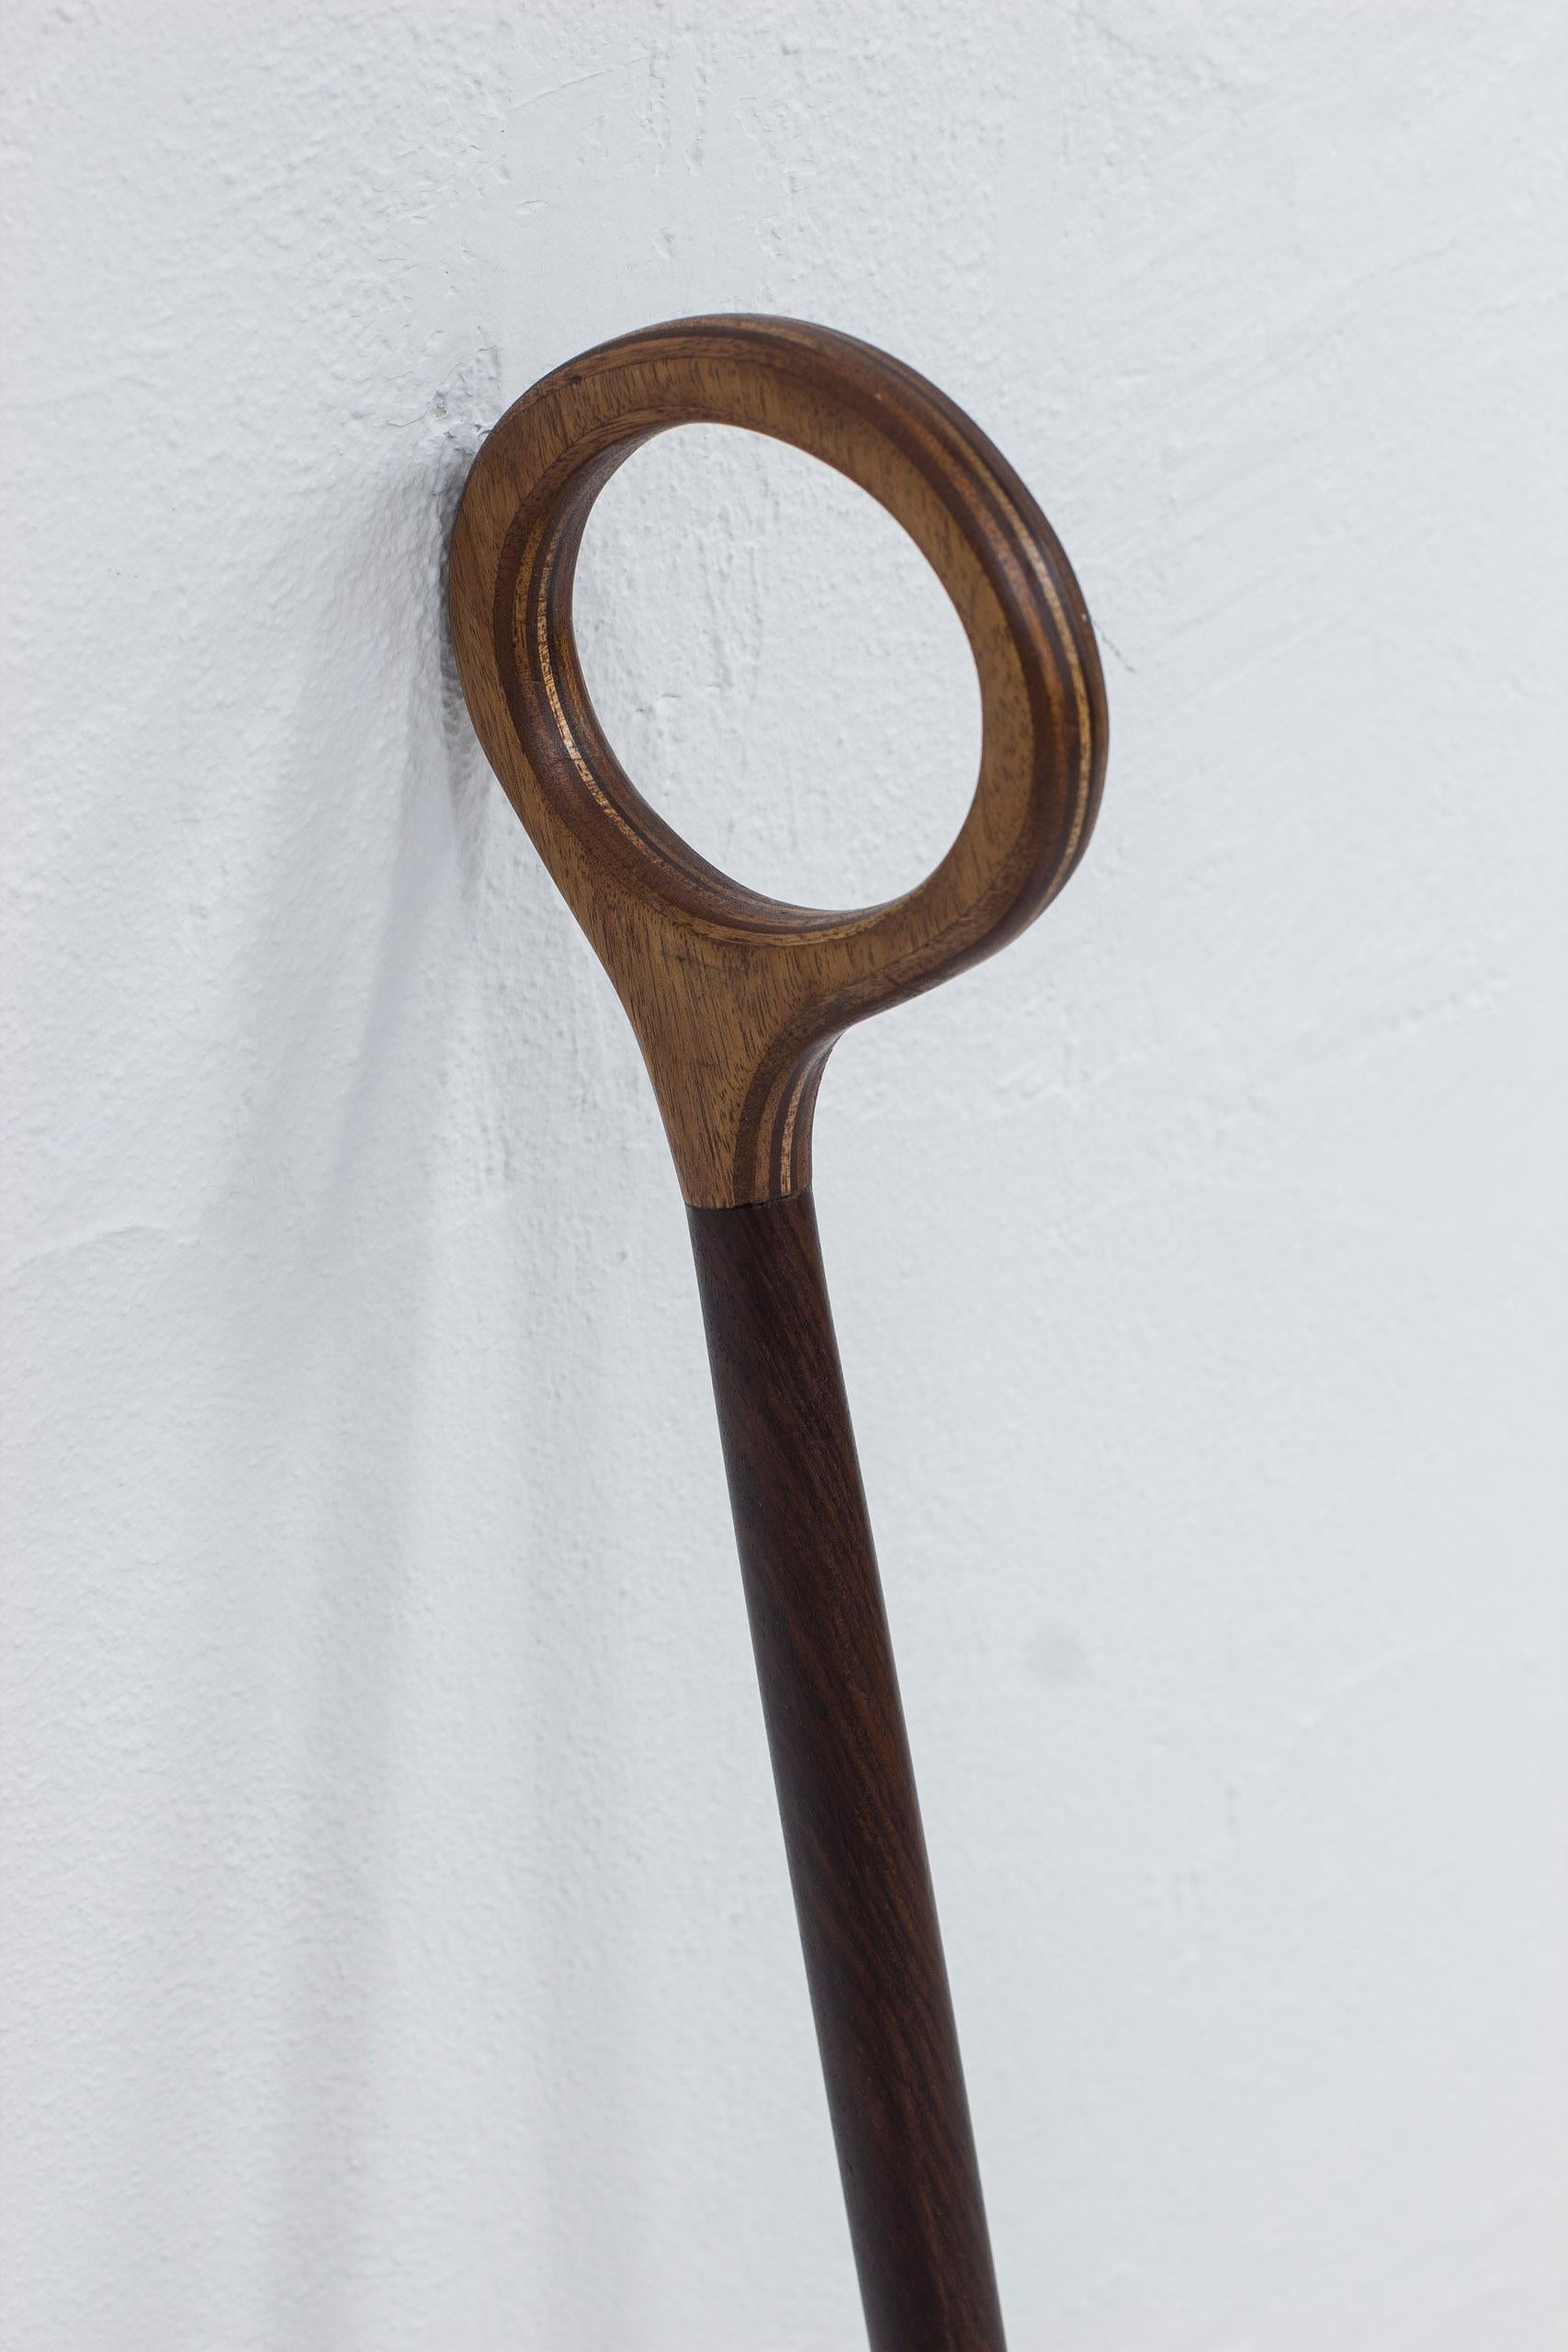 Mid-20th Century Walking Stick / Cane by Nanna & Jørgen Ditzel, by Kold's Savvaerk, Denmark For Sale